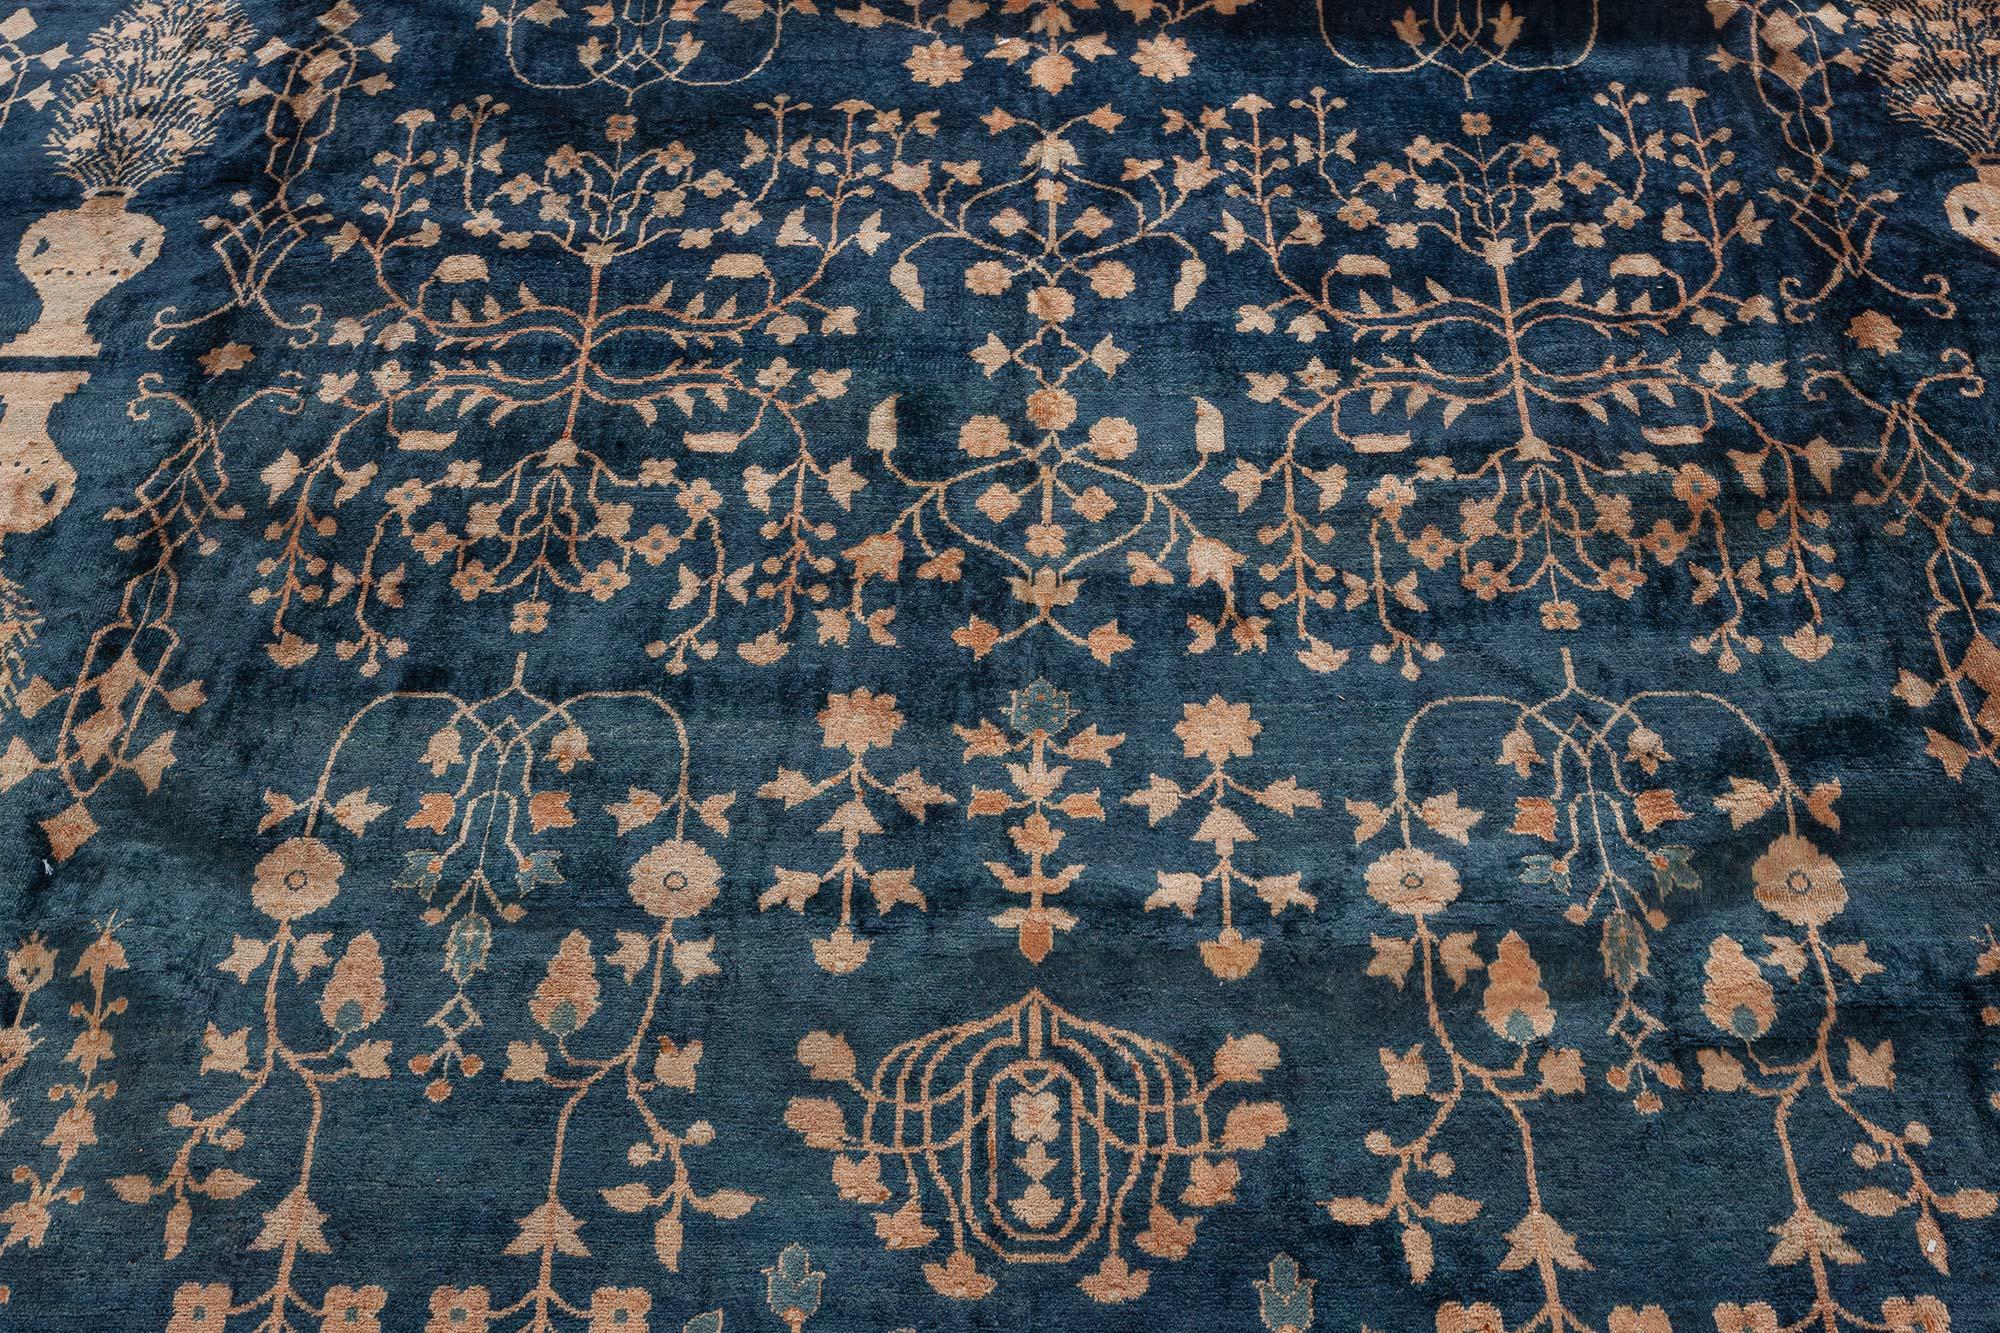 Antique Indian botanic navy blue handmade wool rug
Size: 12'3